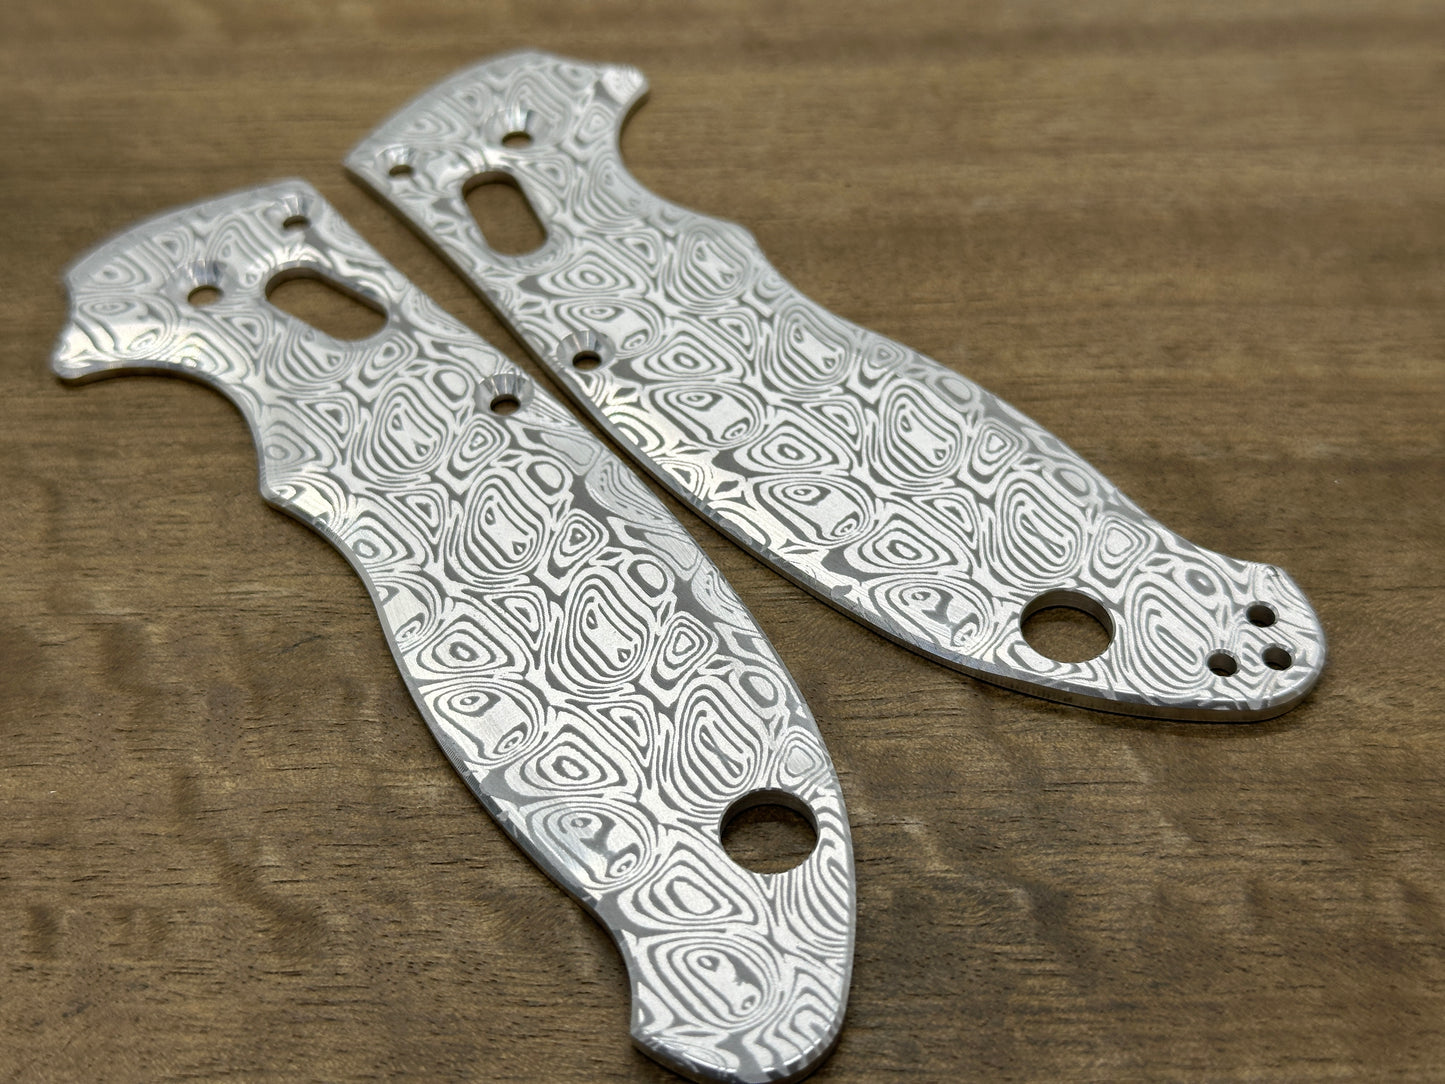 Dama AEGR pattern engraved Aerospace grade Aluminum Scales for Spyderco MANIX 2